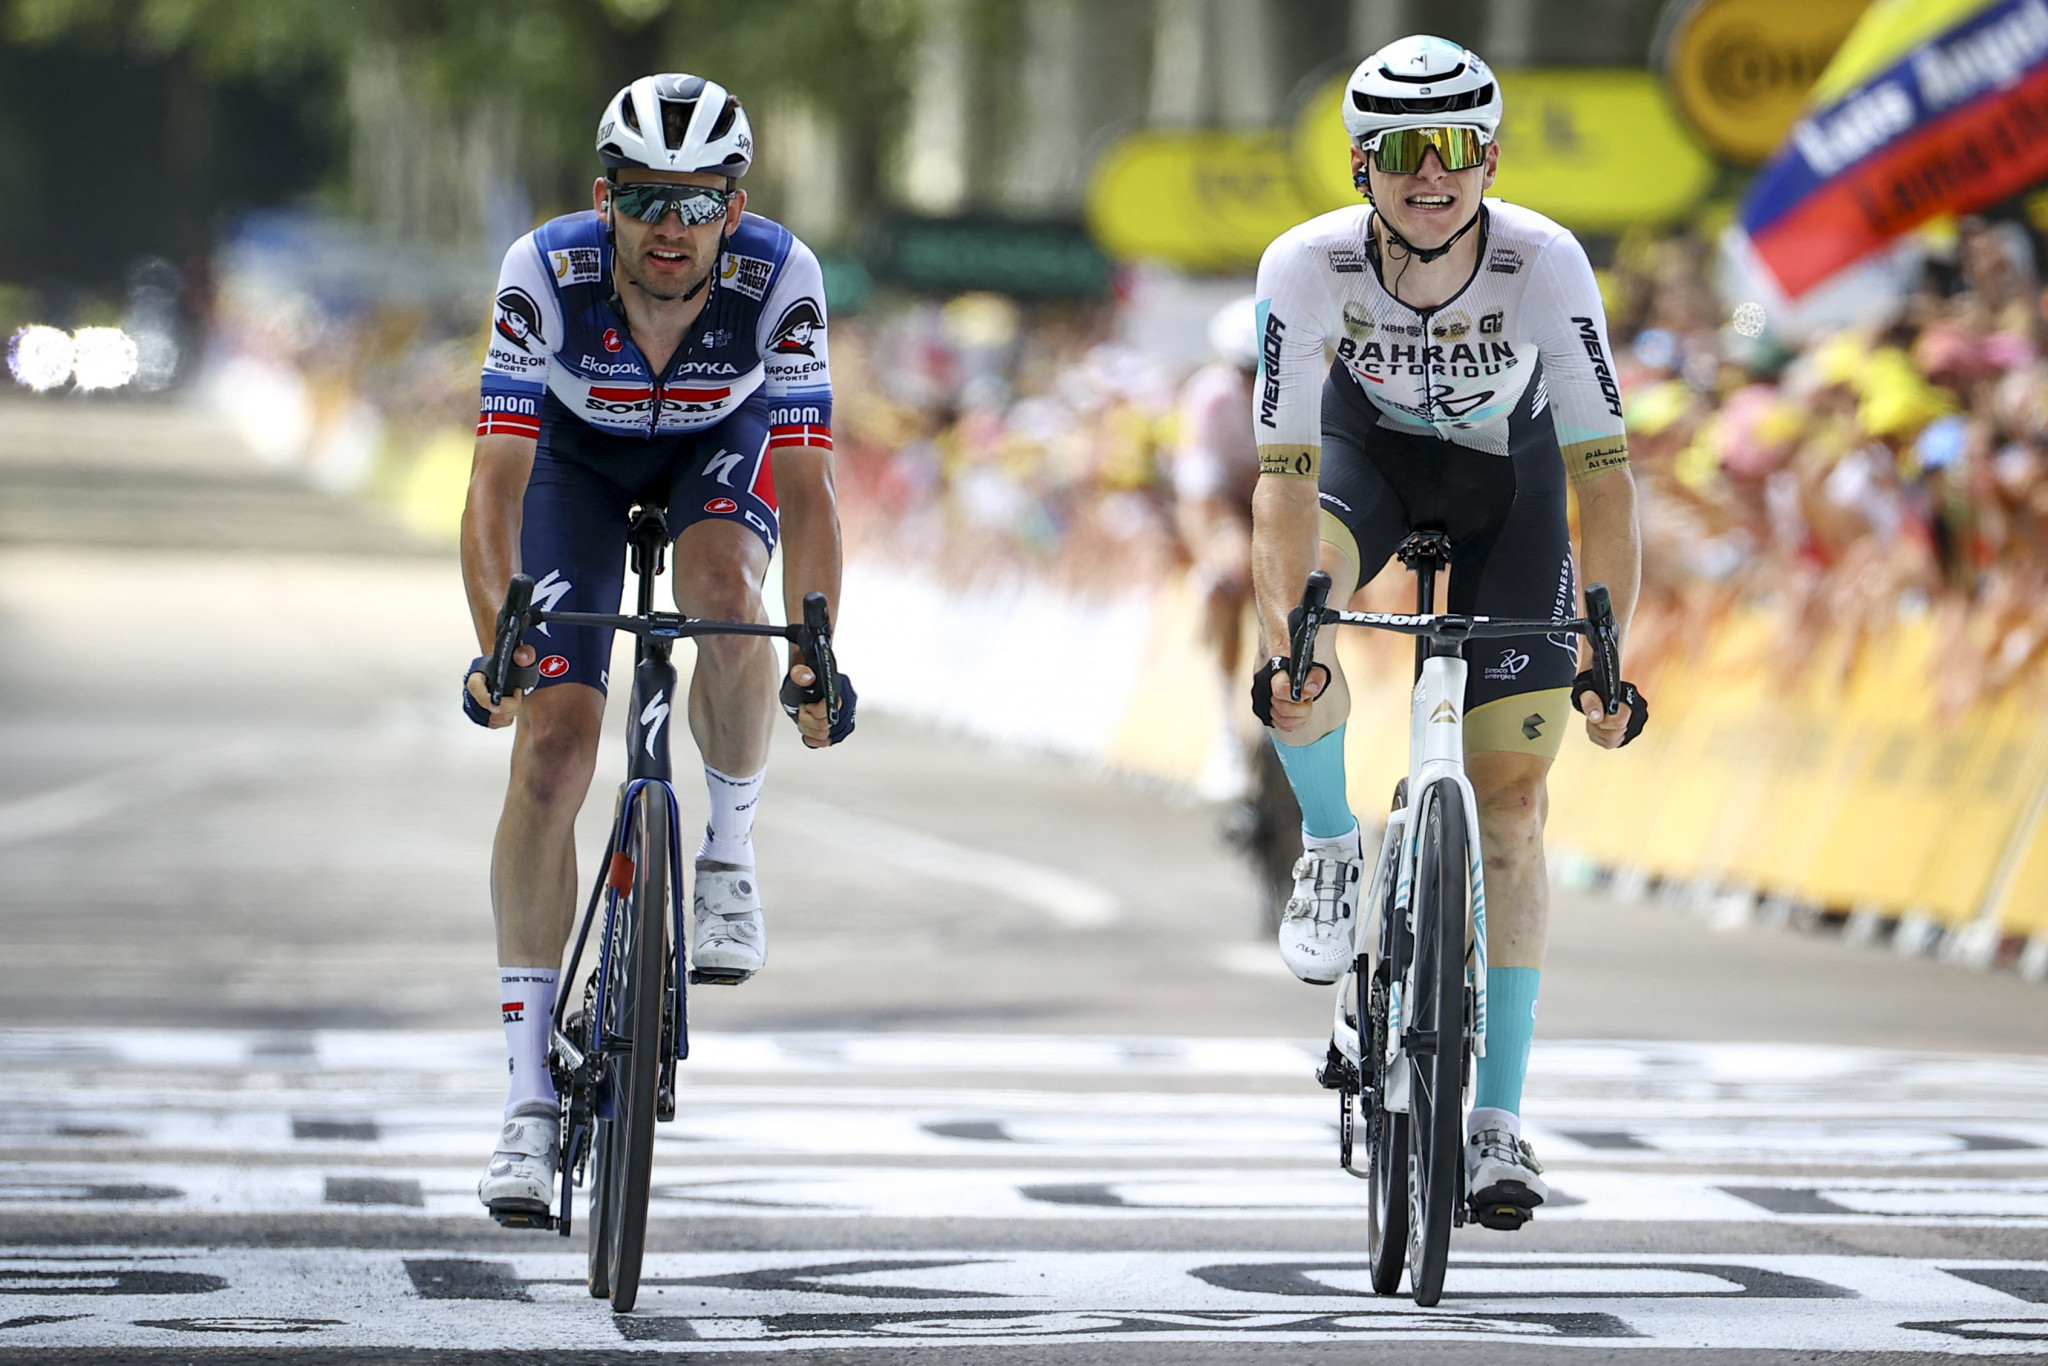 Slovenia's Matej Mohorič, right, narrowly beat Denmark's Kasper Asgreen, left, to win stage 19 on the Tour de France ©Getty Images